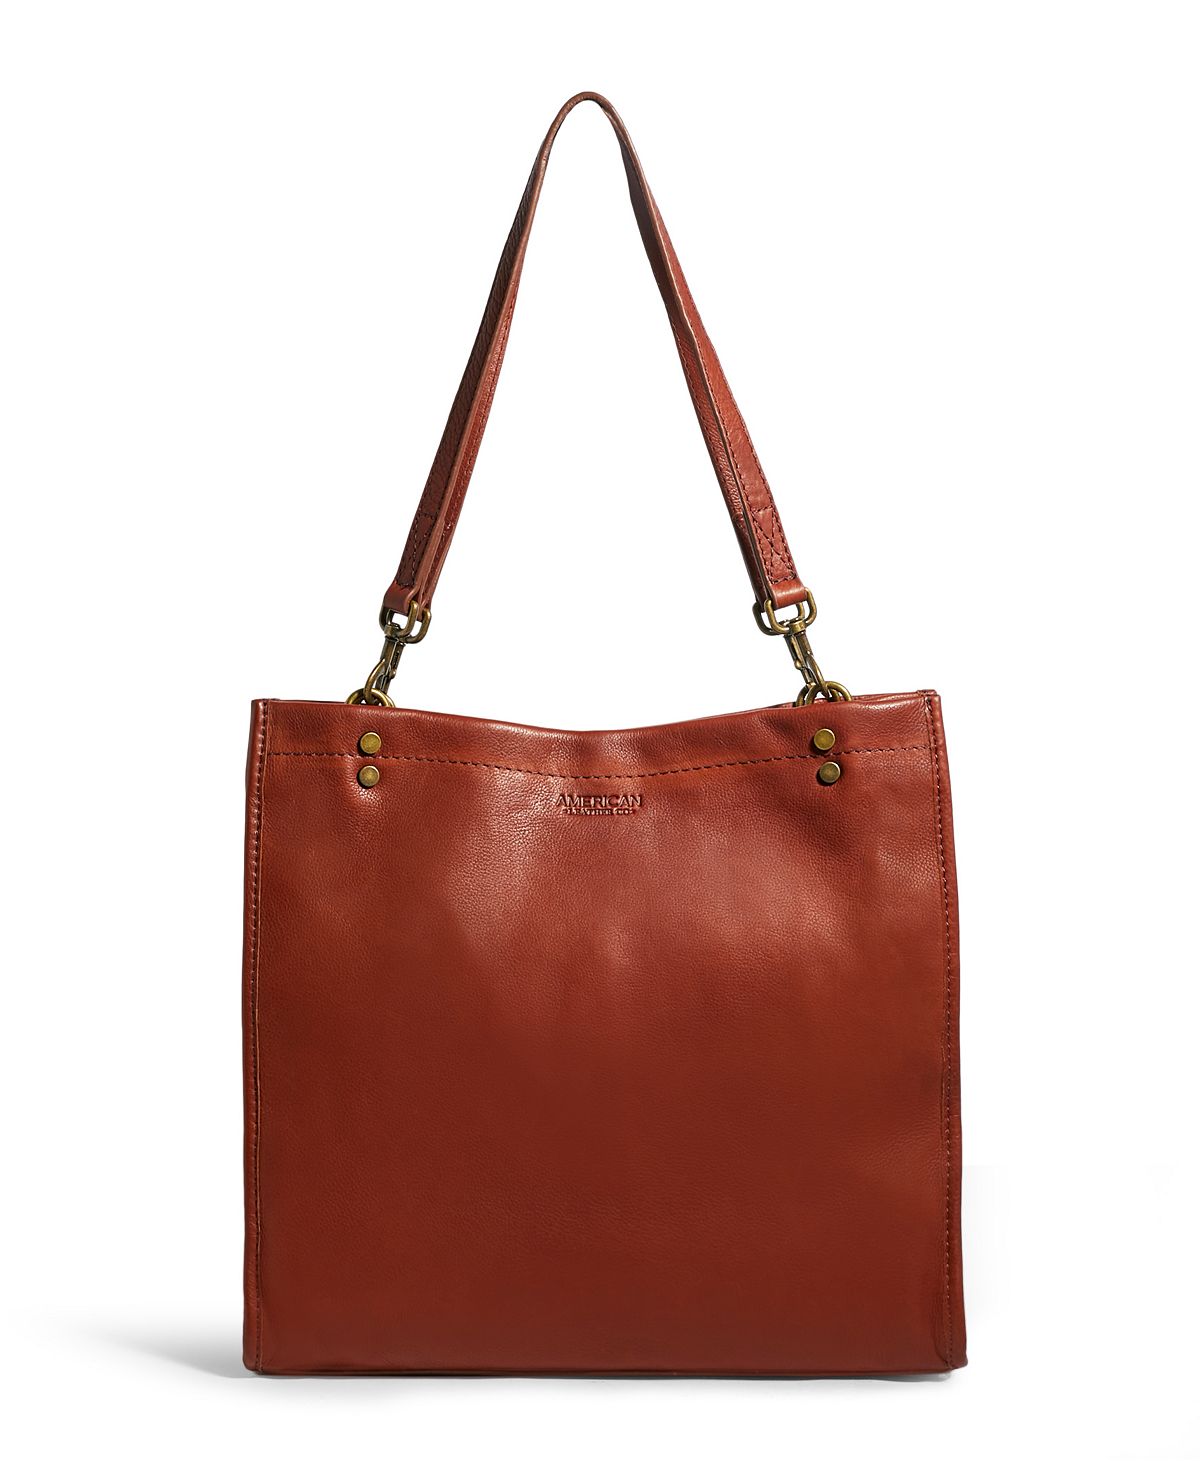 Женская большая сумка Hope American Leather Co. оксфорды manko mephisto цвет brandy smooth leather